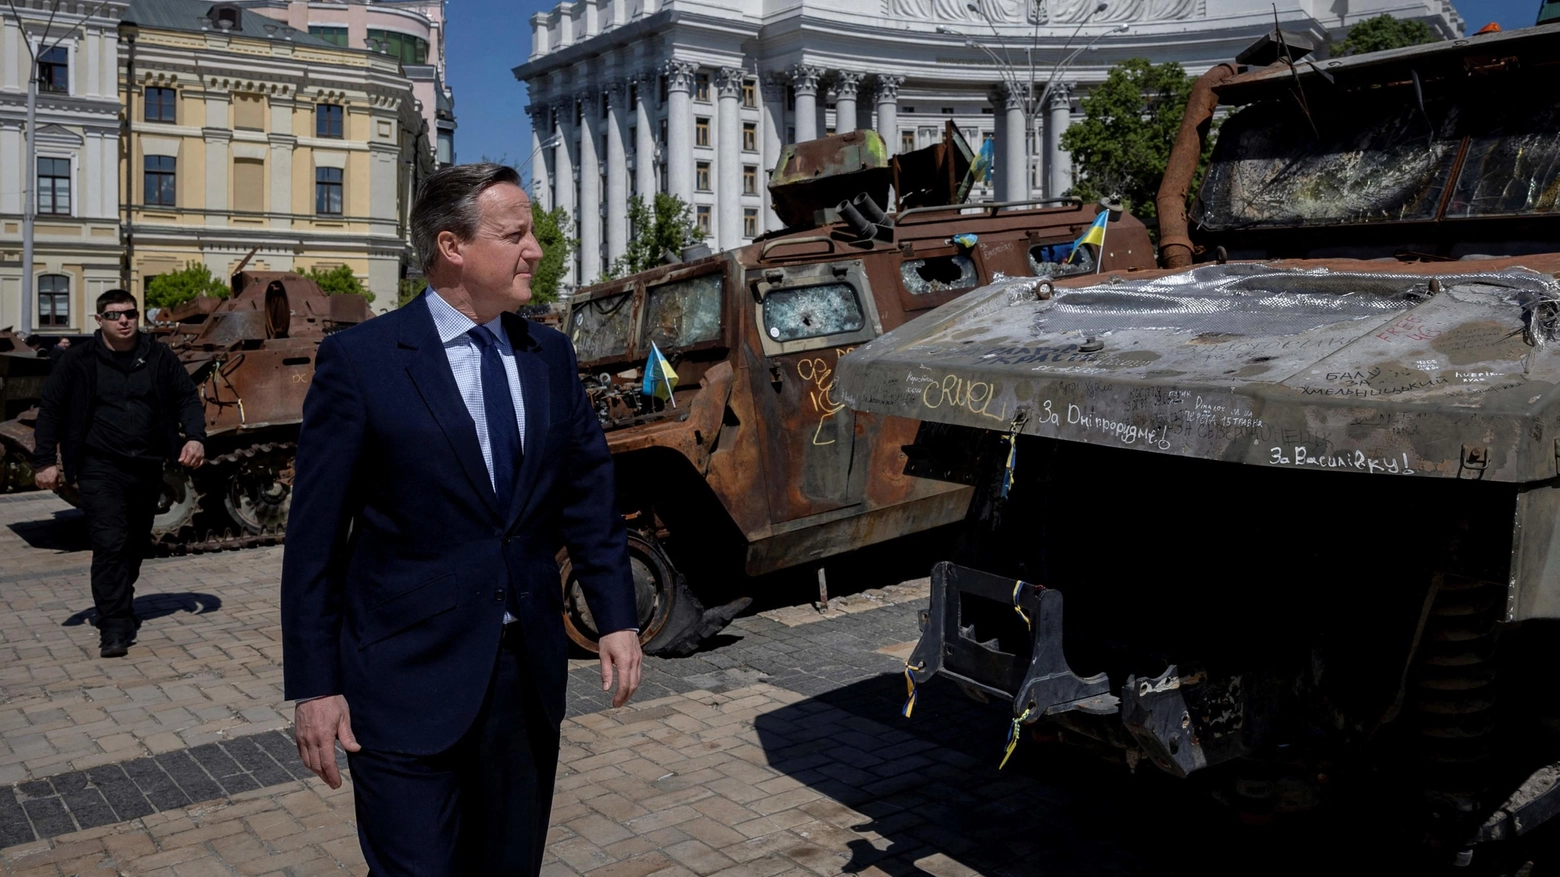 David Cameron in visita a Kiev (foto Ansa)